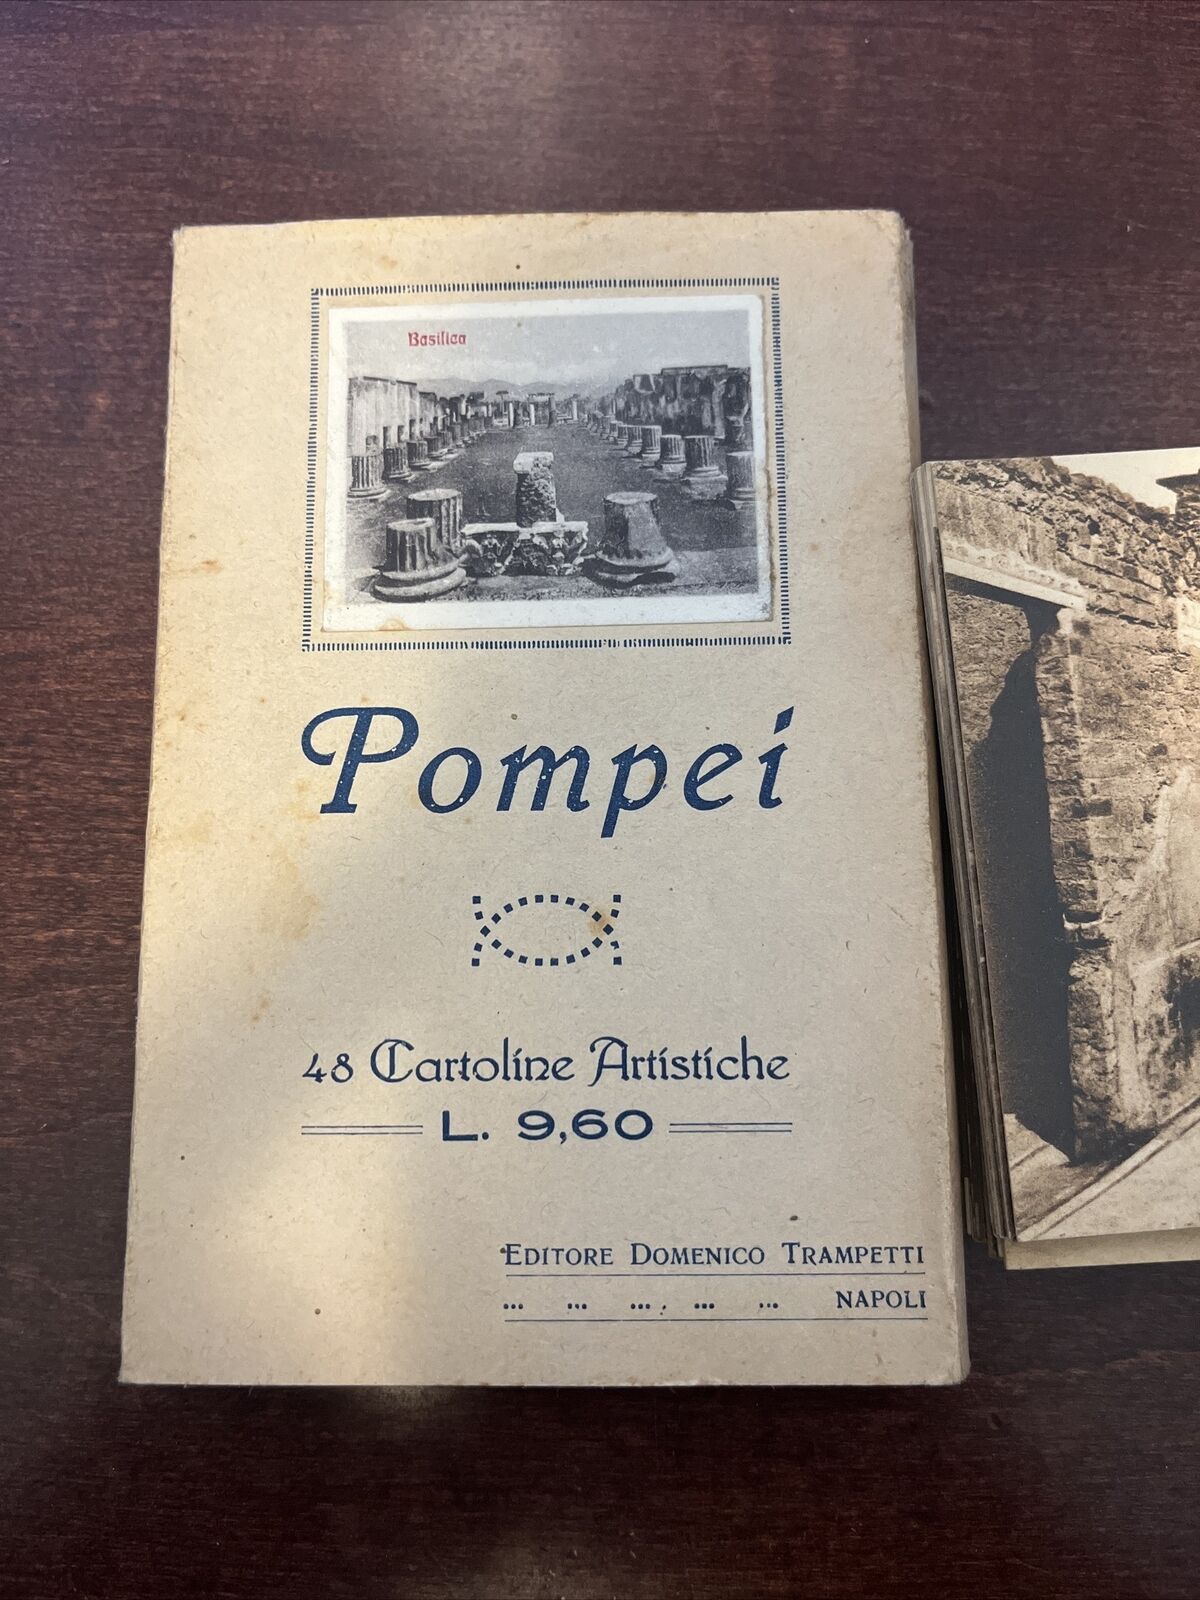 Vintage Pompei 48 Cartoline Artistic he Napoli